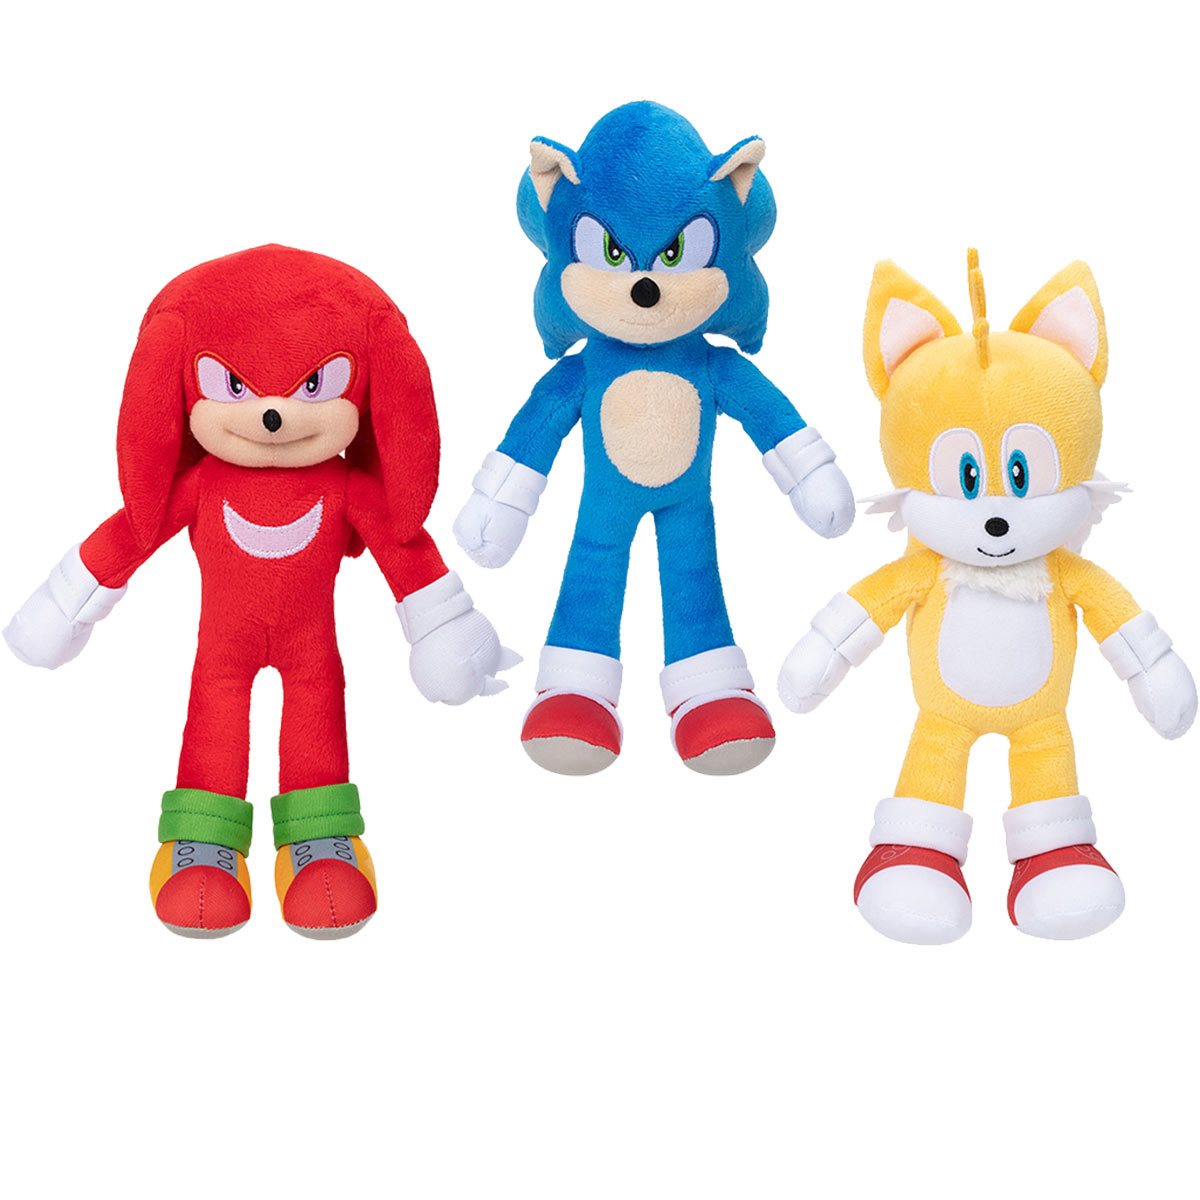 Sonic The Hedgehog: Mighty 9 Plush